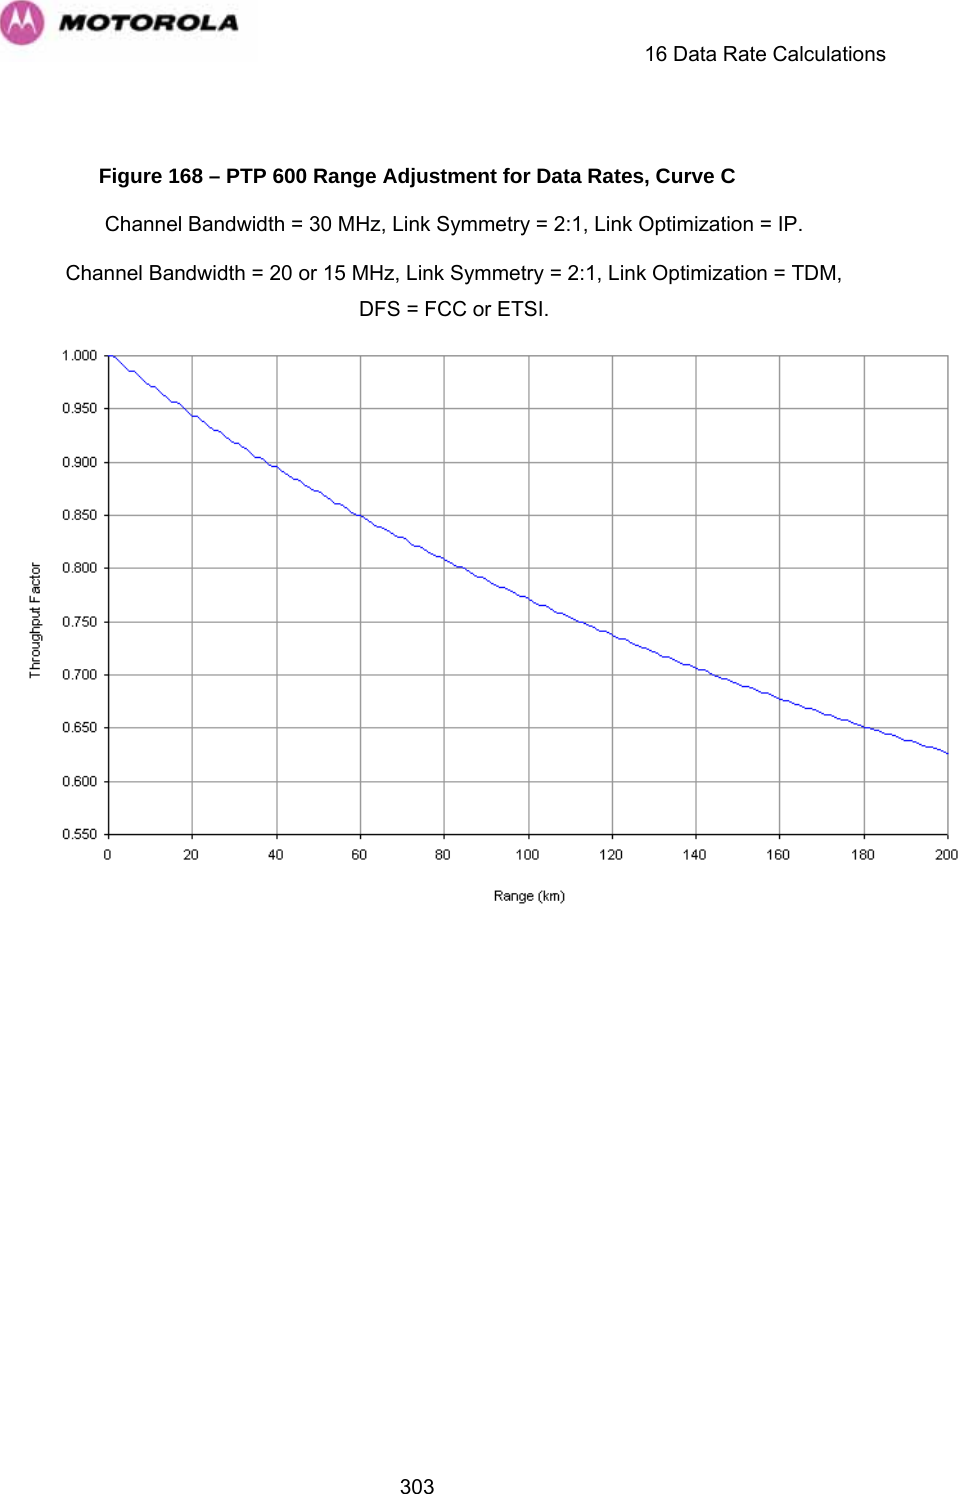     16 Data Rate Calculations  303 Figure 168 – PTP 600 Range Adjustment for Data Rates, Curve C Channel Bandwidth = 30 MHz, Link Symmetry = 2:1, Link Optimization = IP. Channel Bandwidth = 20 or 15 MHz, Link Symmetry = 2:1, Link Optimization = TDM,  DFS = FCC or ETSI.  